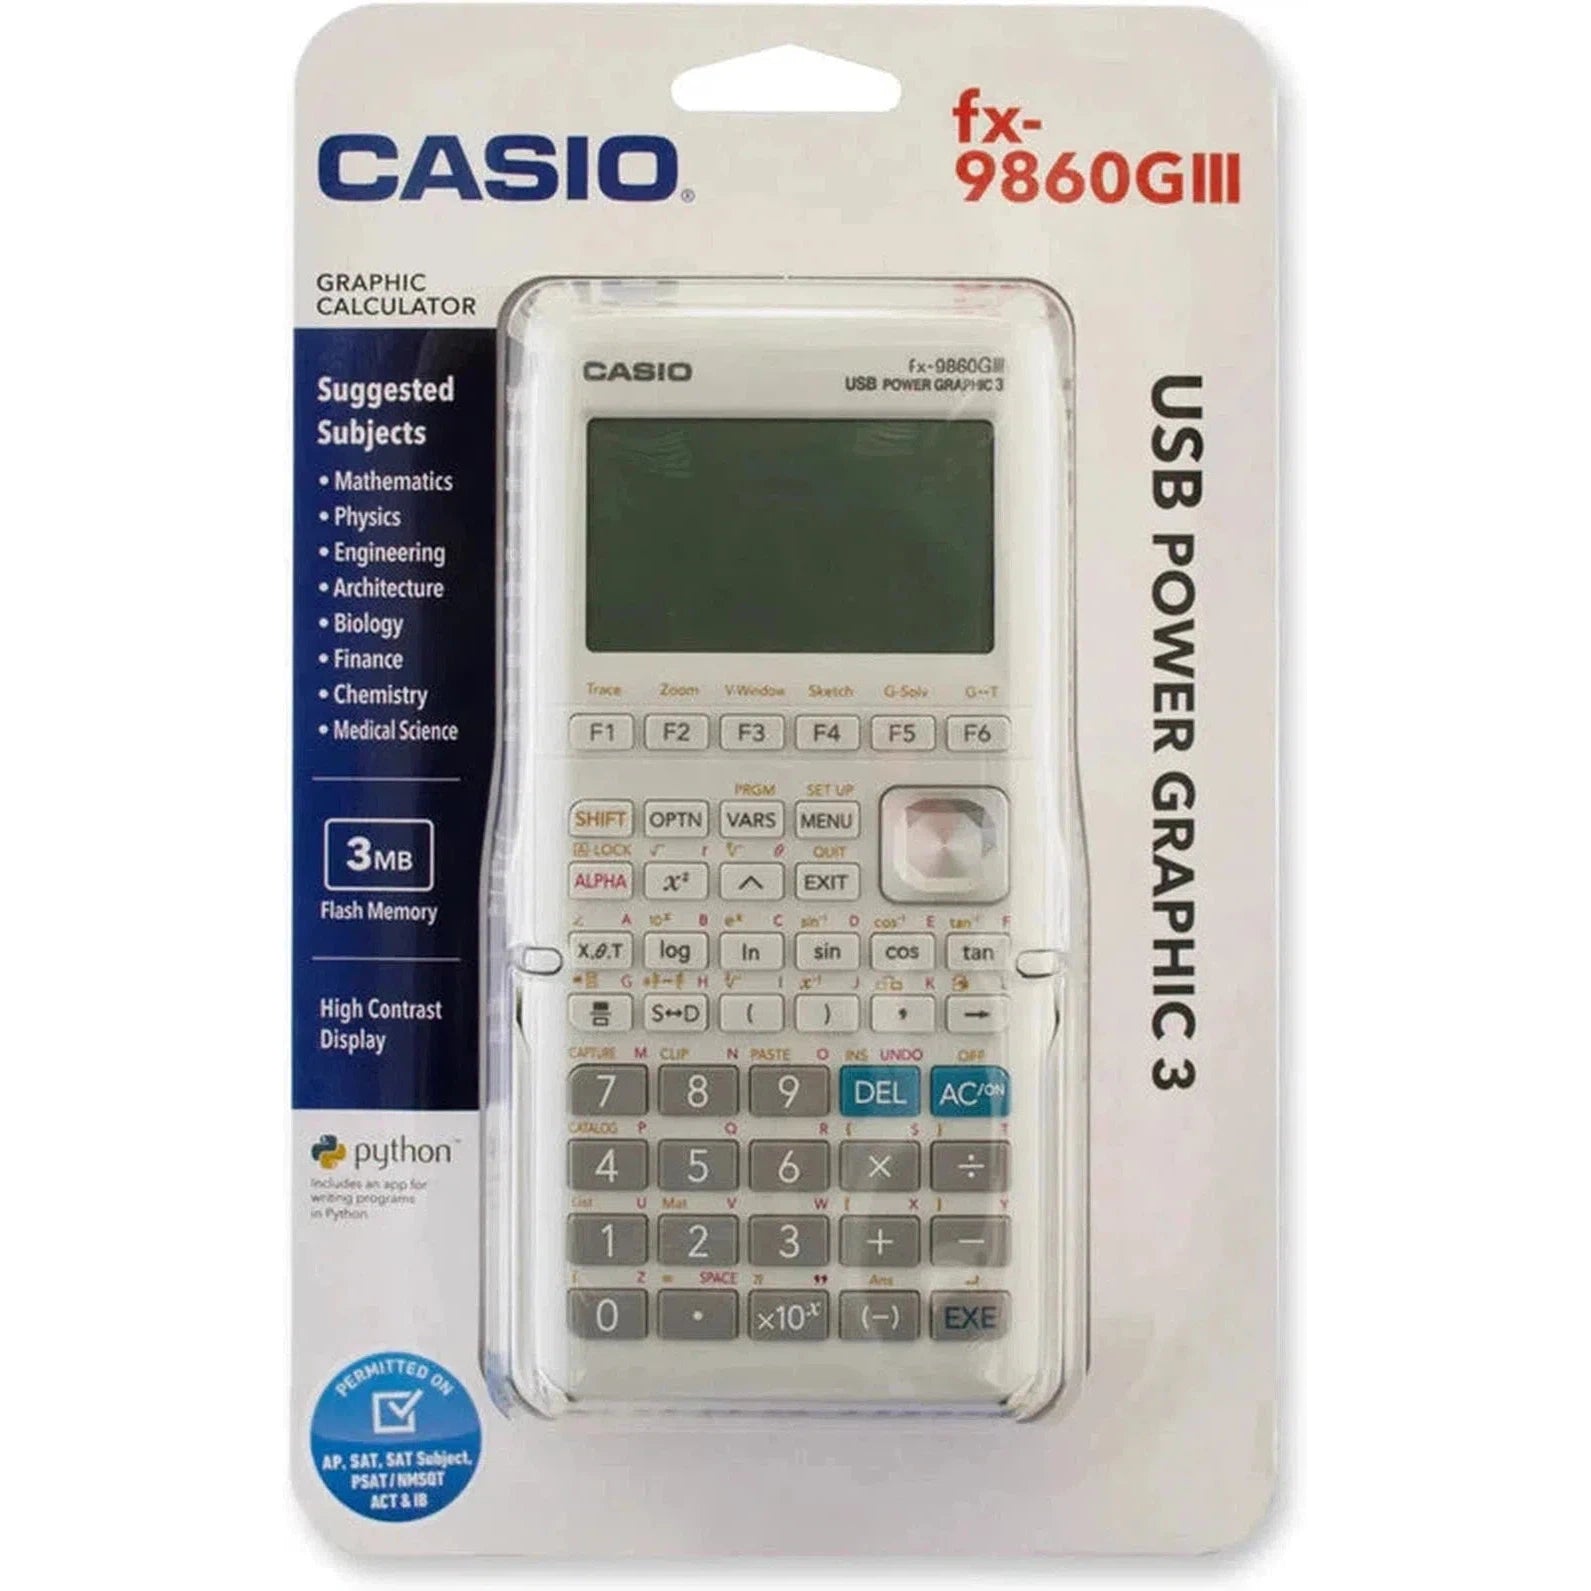 Casio Fx-9860Giii-Calculators-Casio-Star Light Kuwait